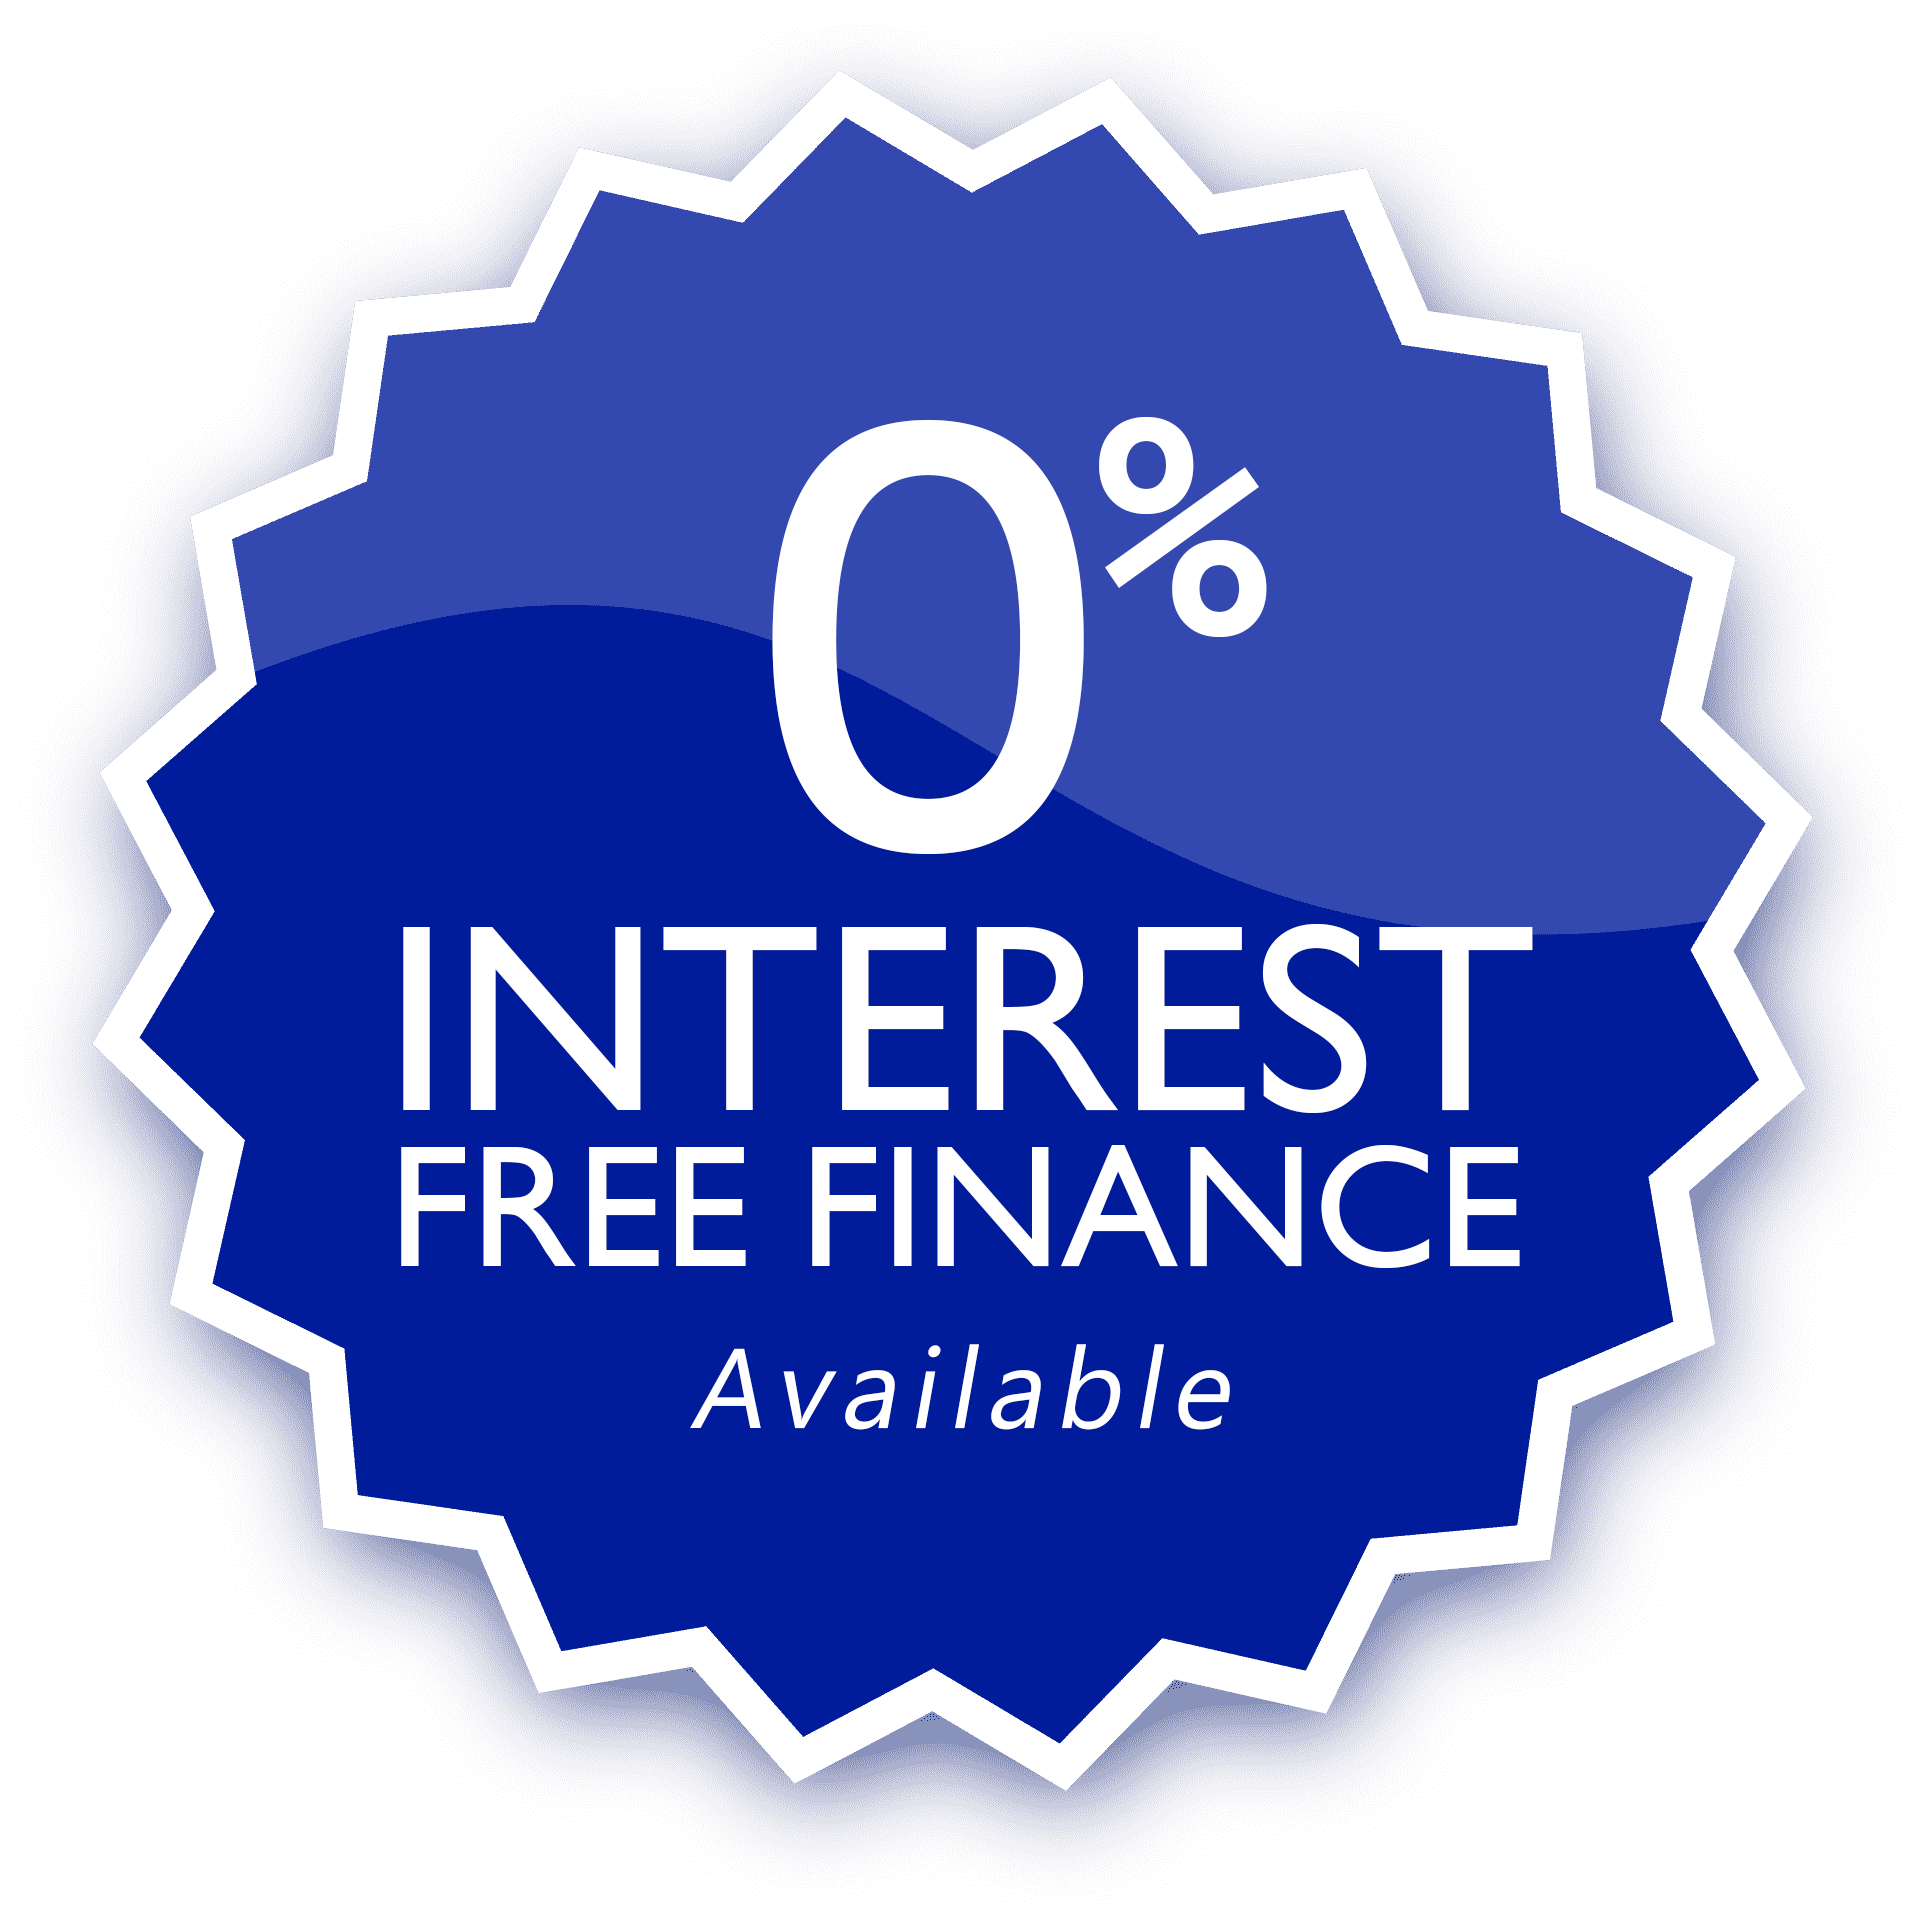 0% zero interest Free Finance Available